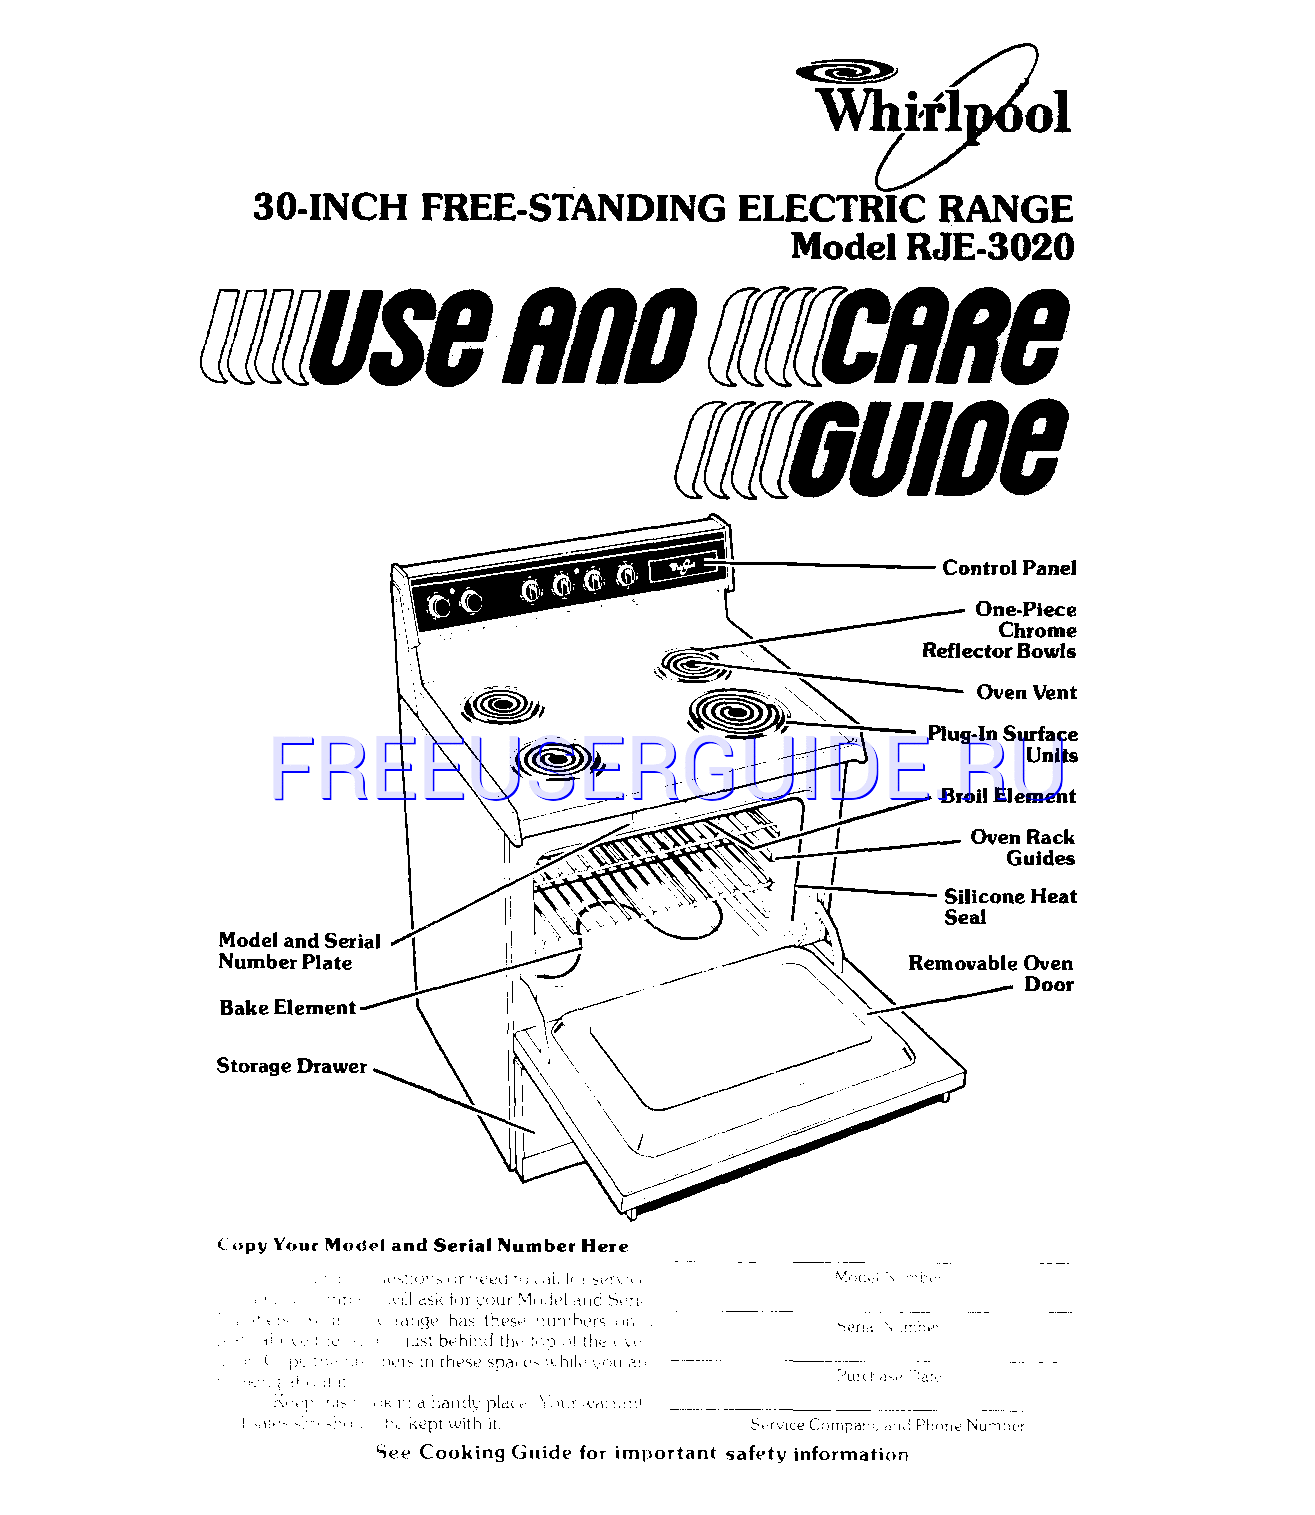 Leer online Manual de usuario para Whirlpool RJE-3020 (Page 1)